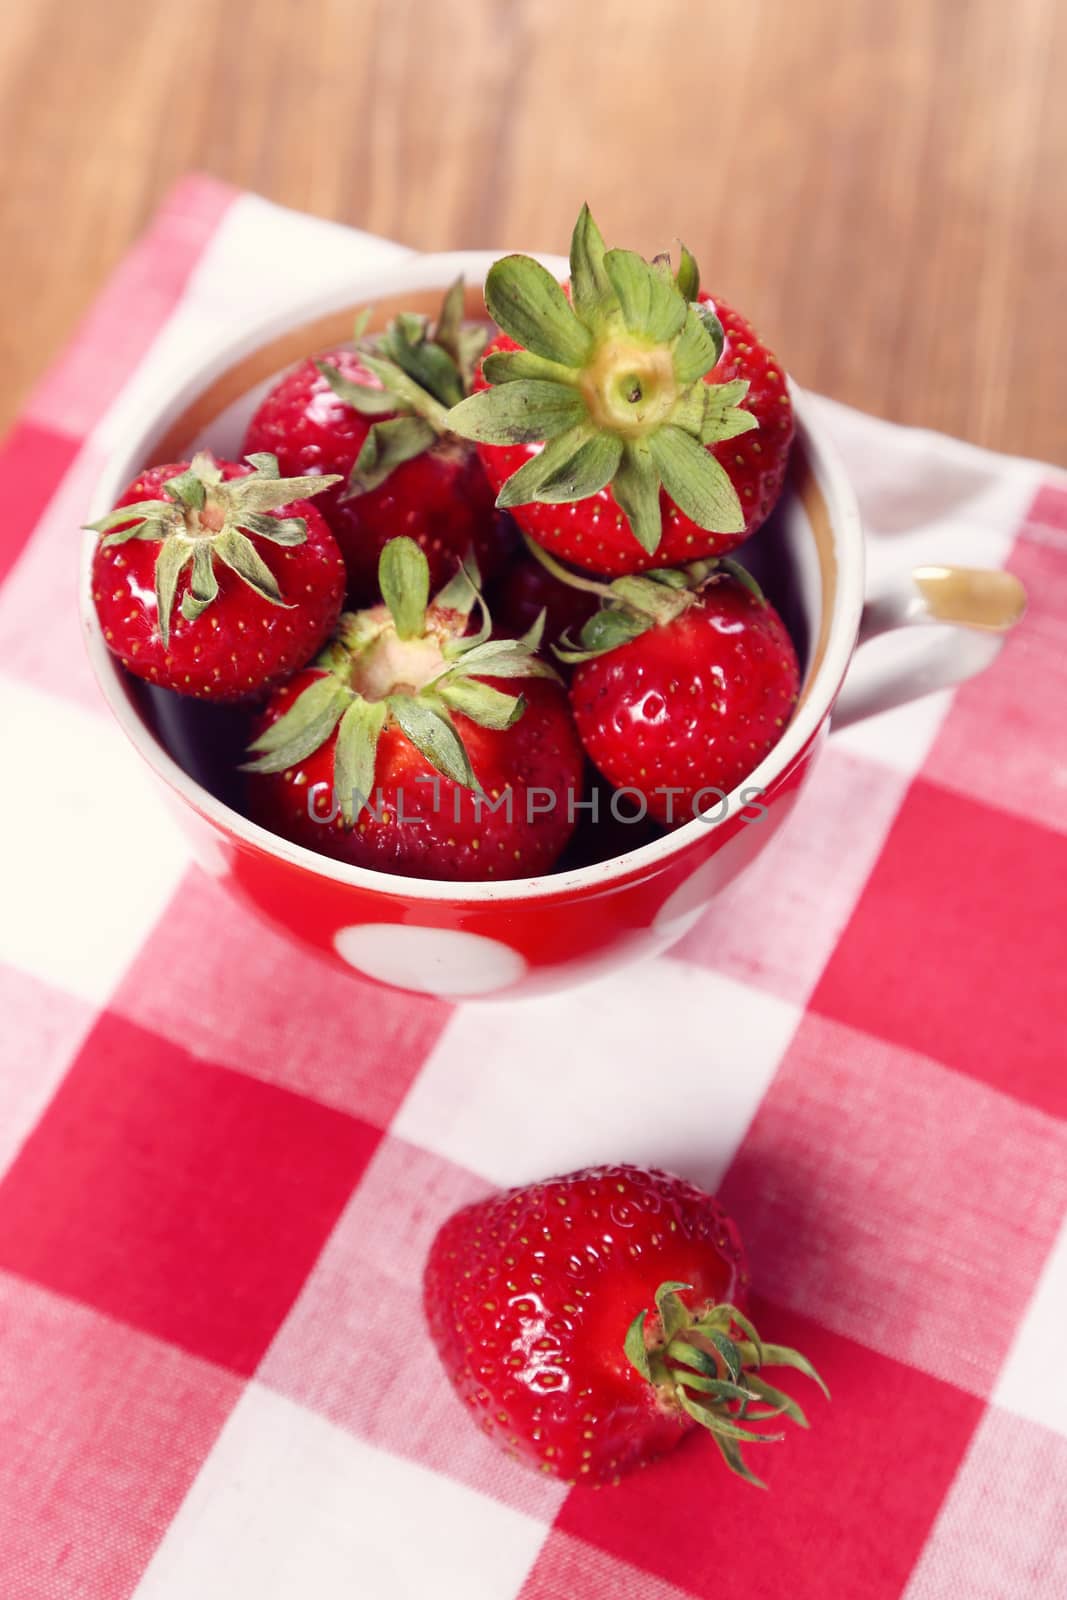 heap red ripe,fresh strawberry in ceramic cup